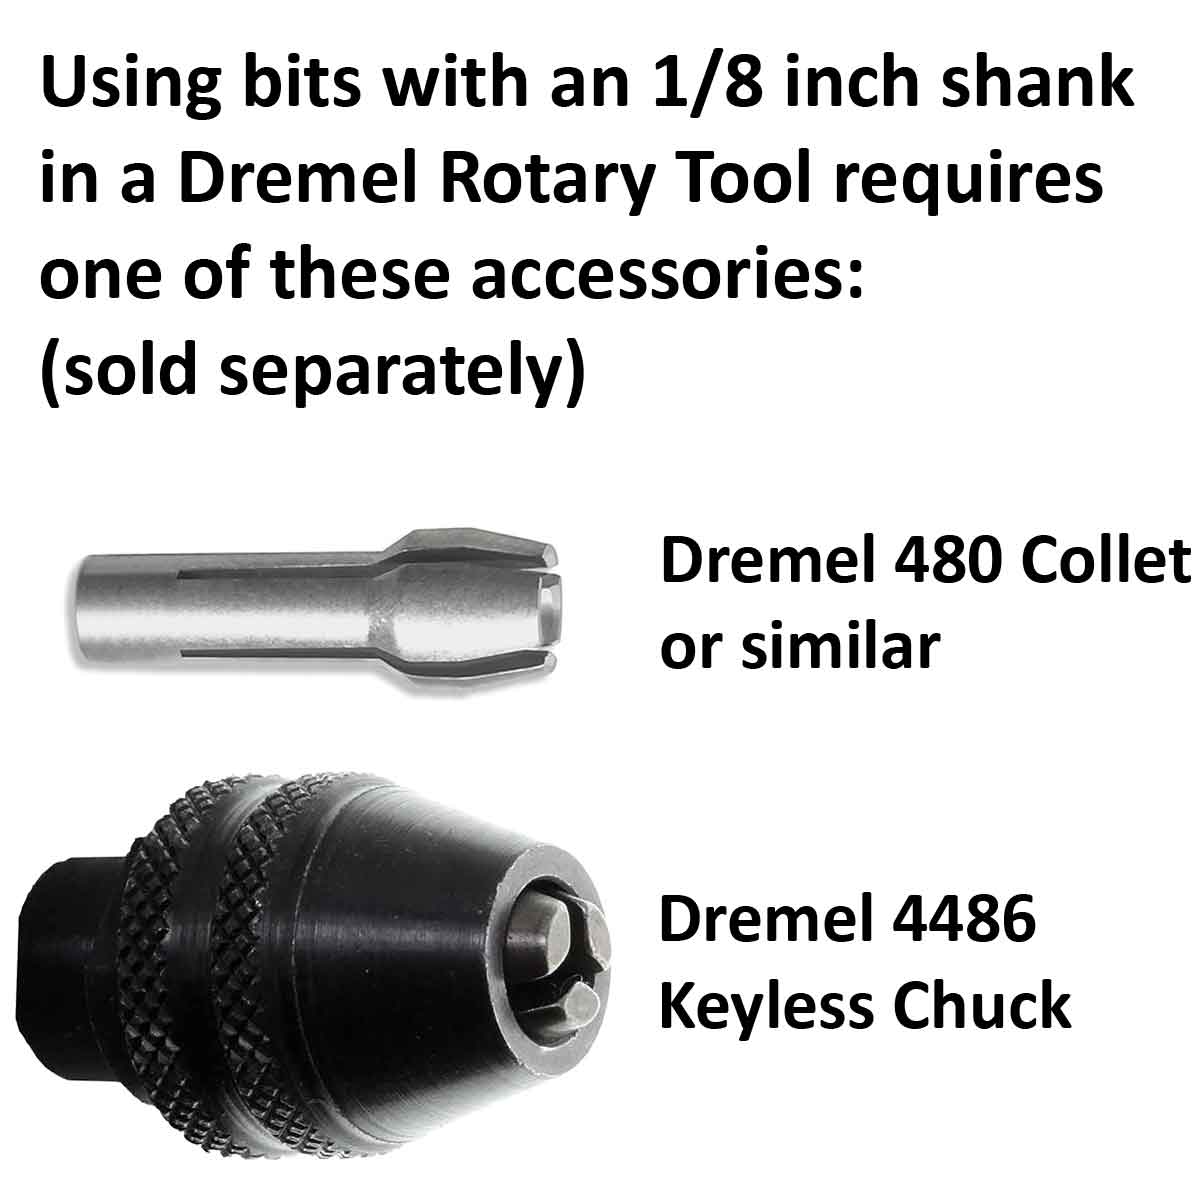 Dremel 9934 CONE Structured Tooth Tungsten Carbide Cutter